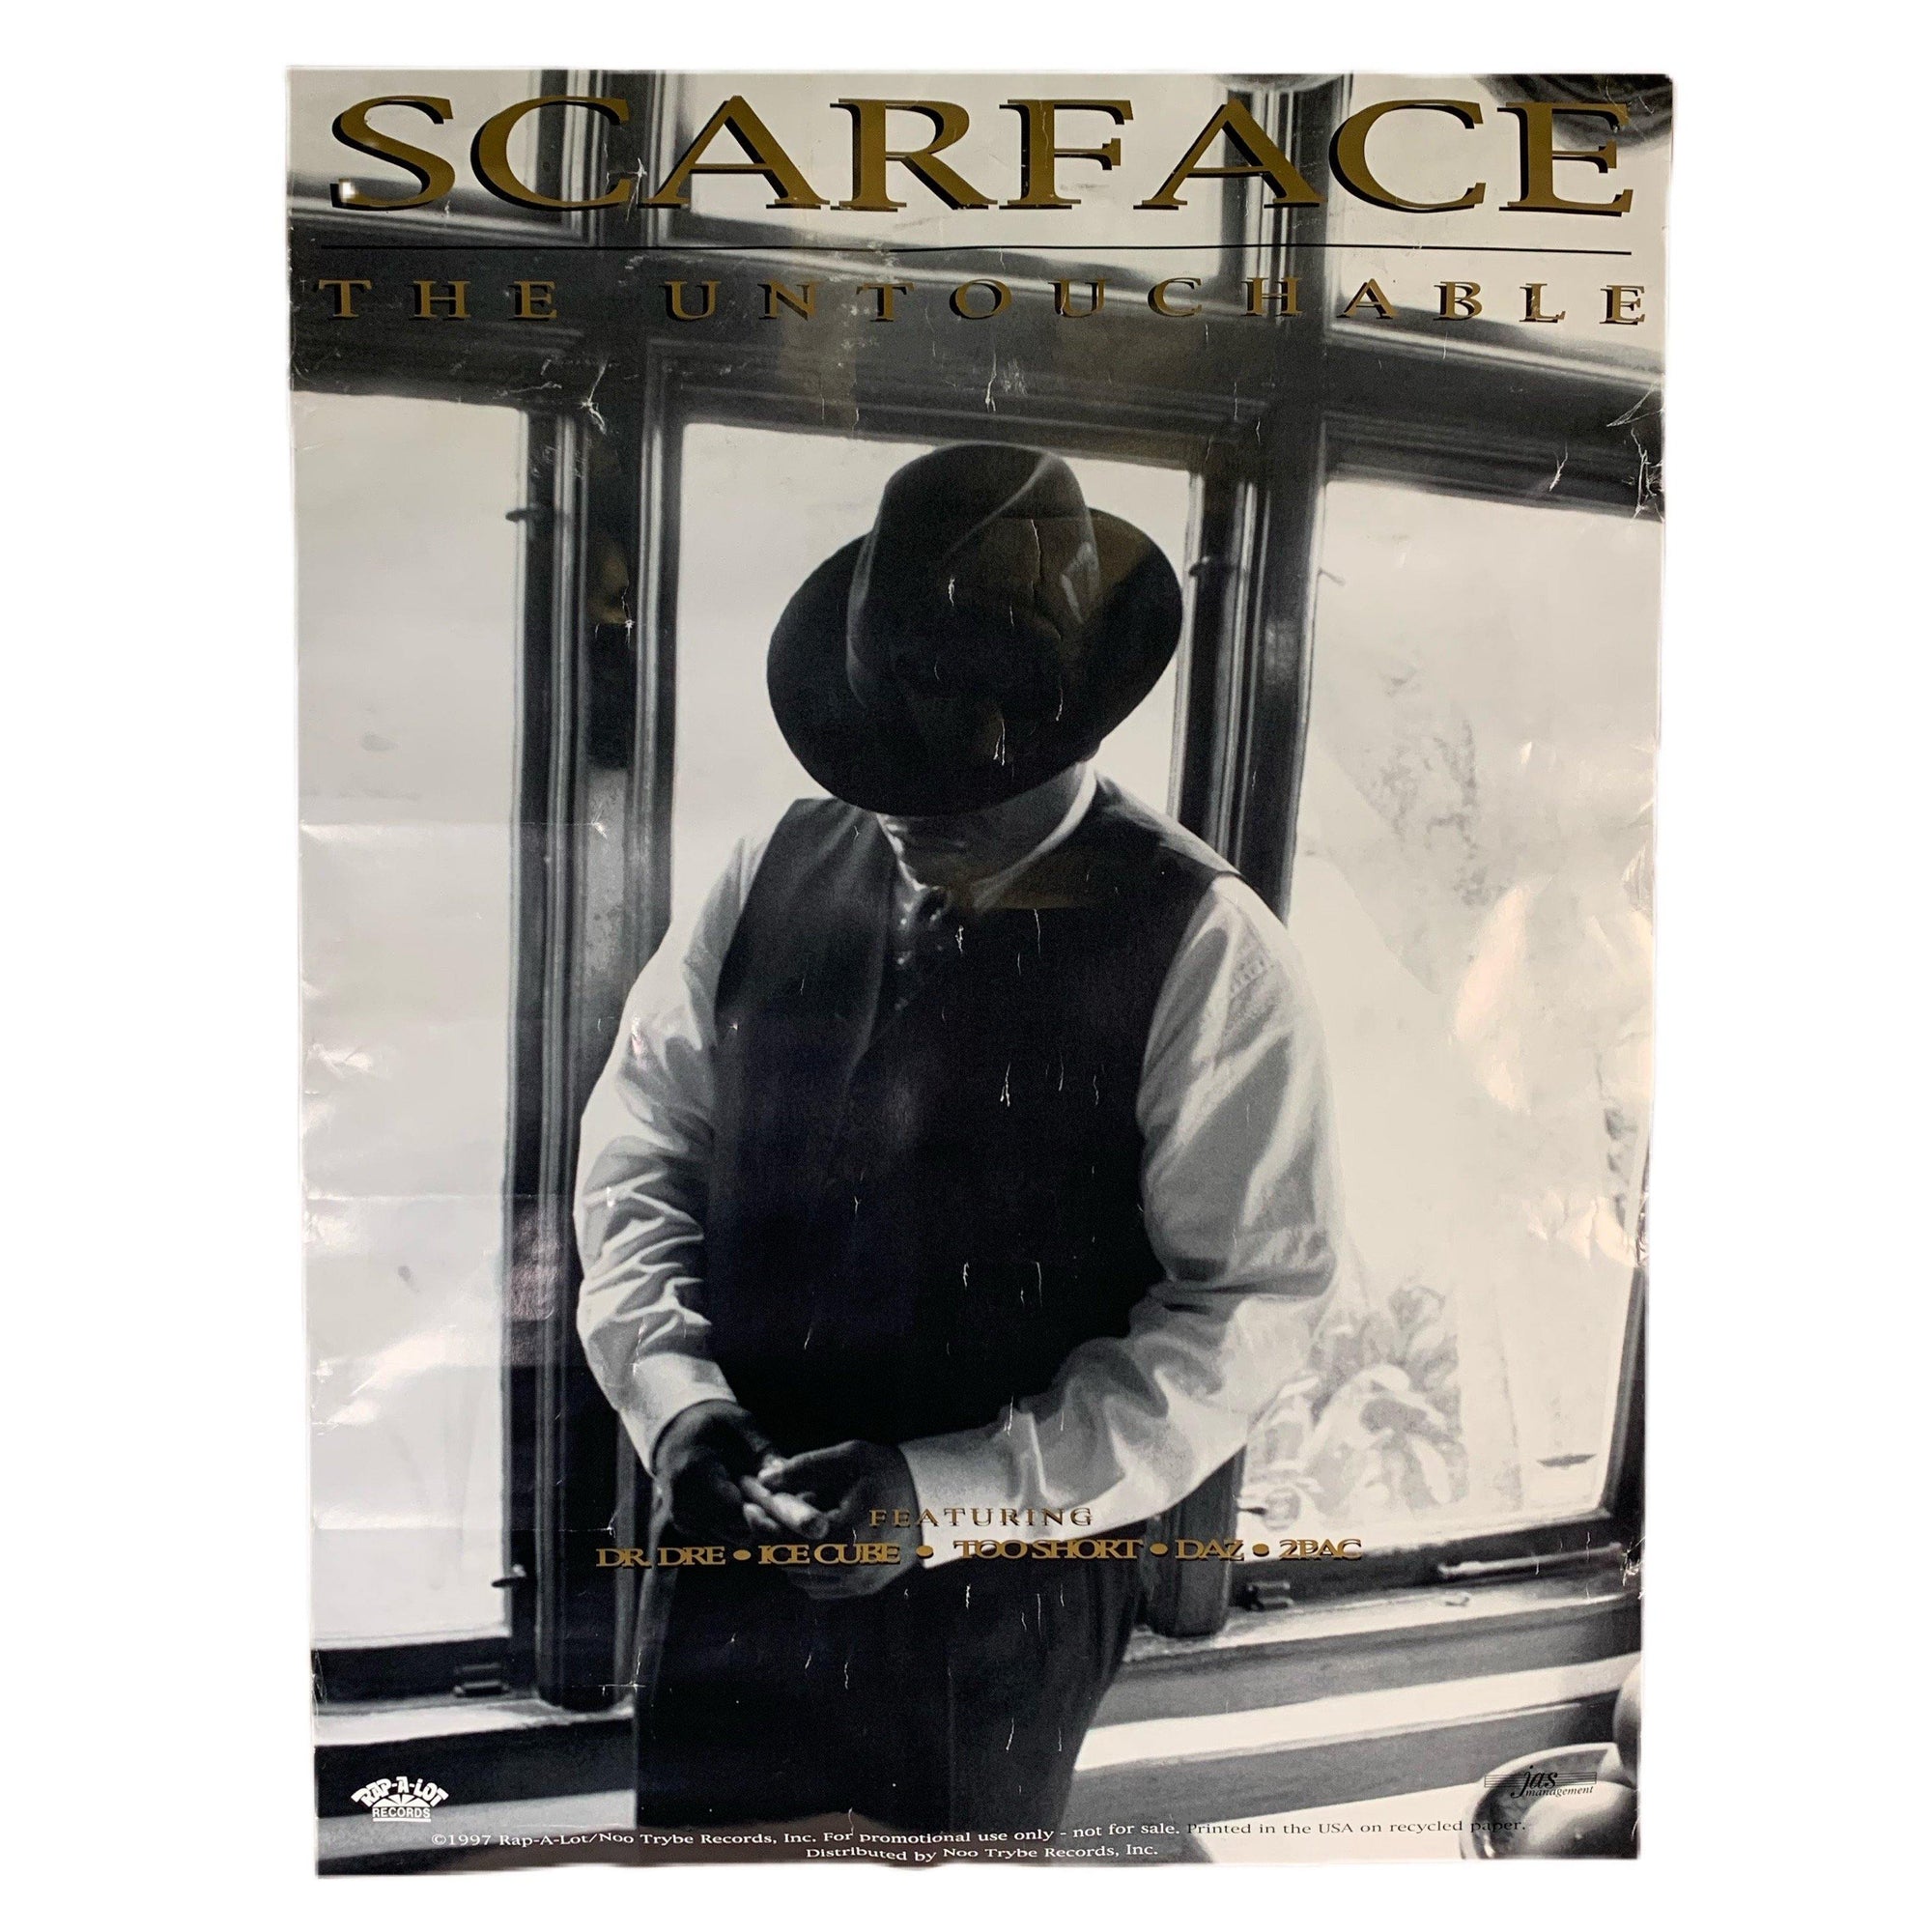 Vintage Scarface "The Untouchable" Rap-A-Lot Records Promo Poster - jointcustodydc